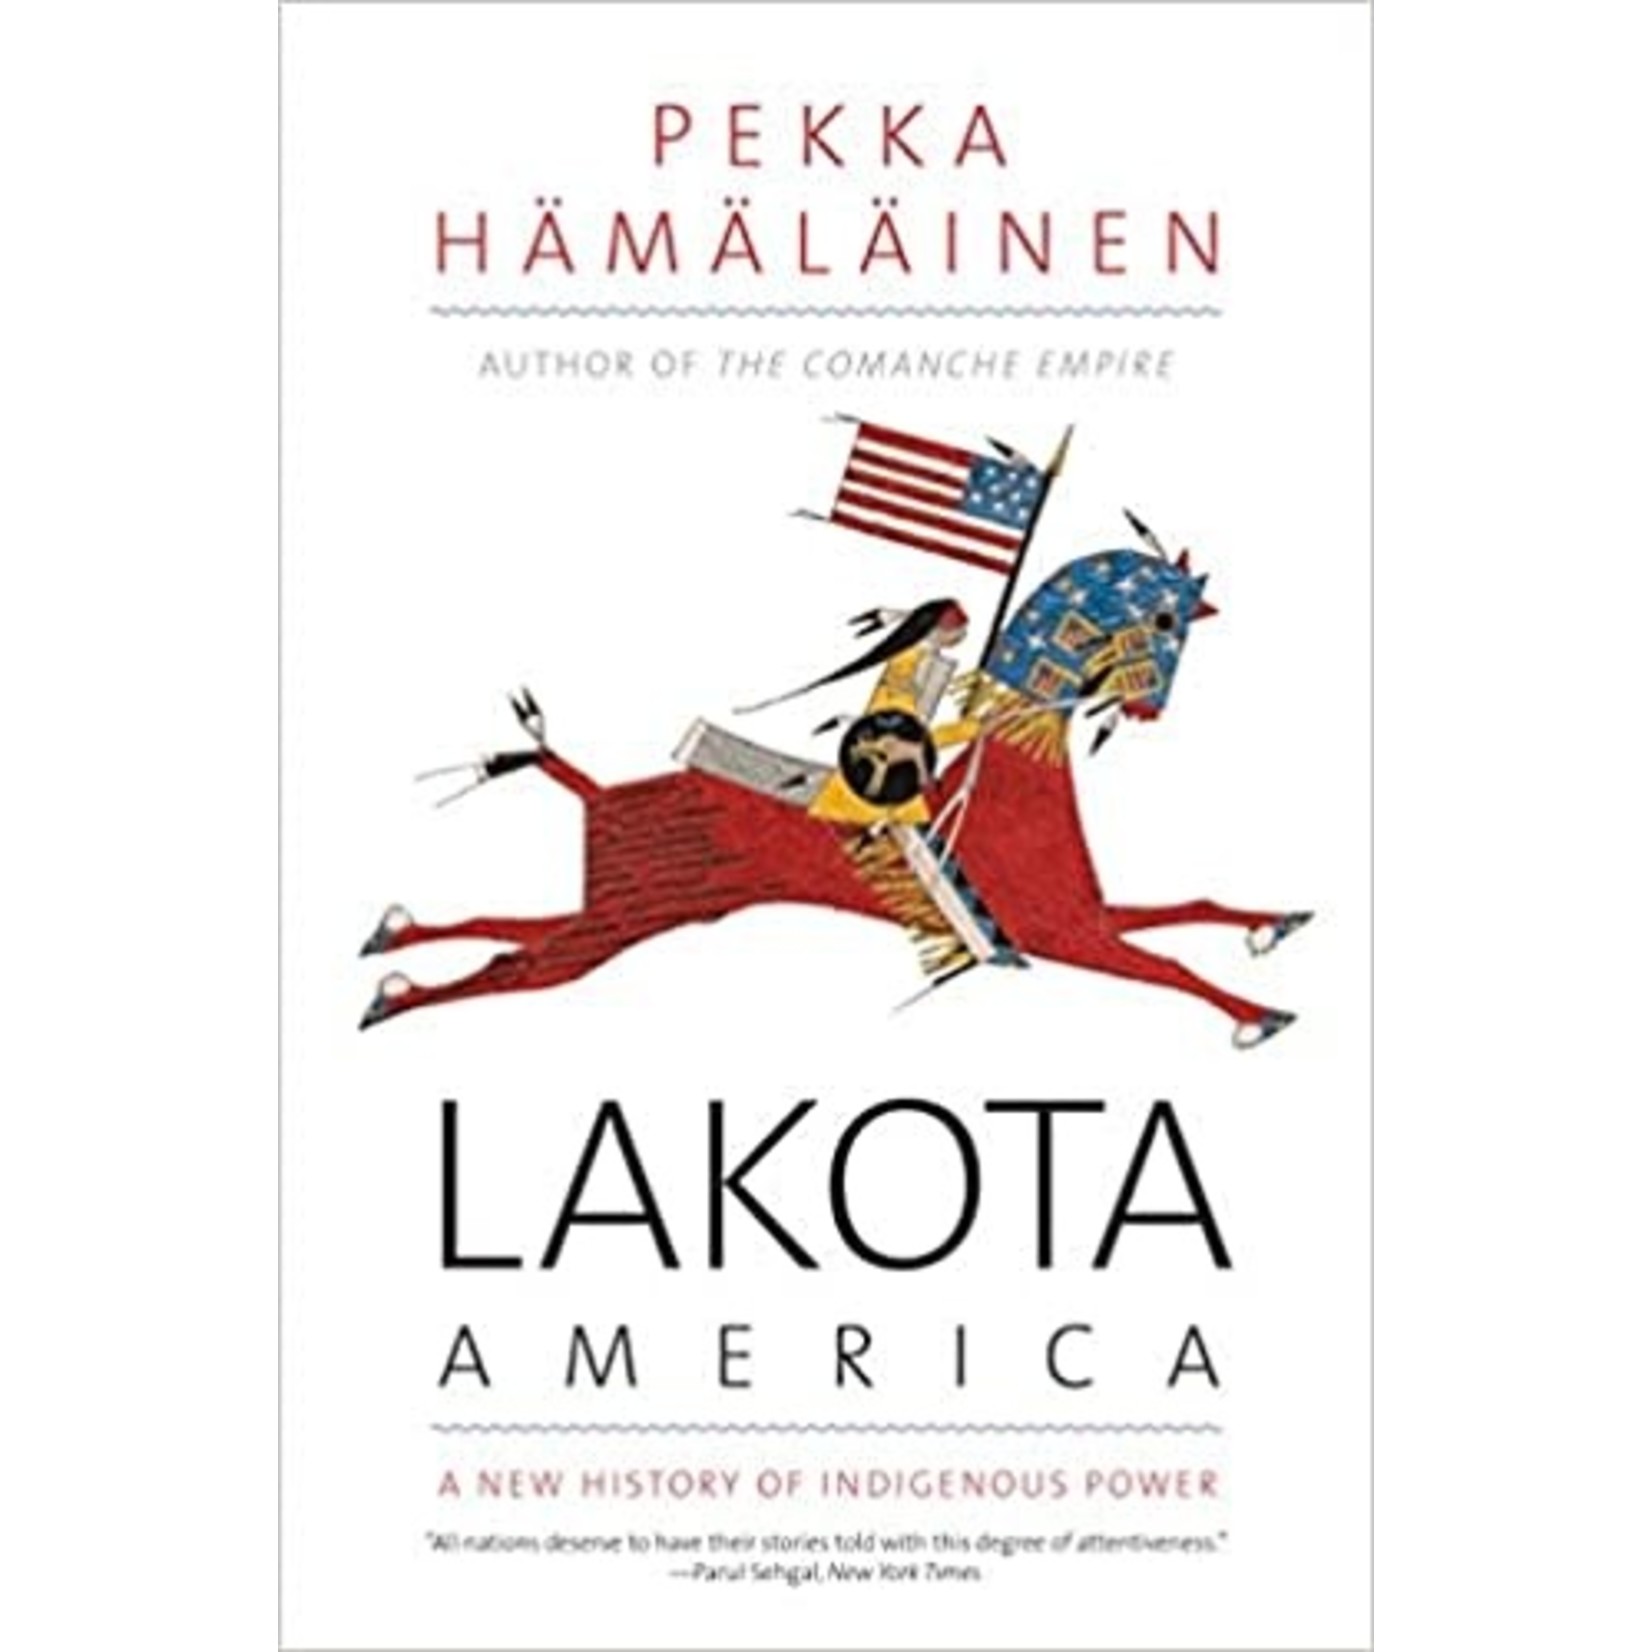 Lakota America : A New History of Indigenous Power by Pekka Hamakainen